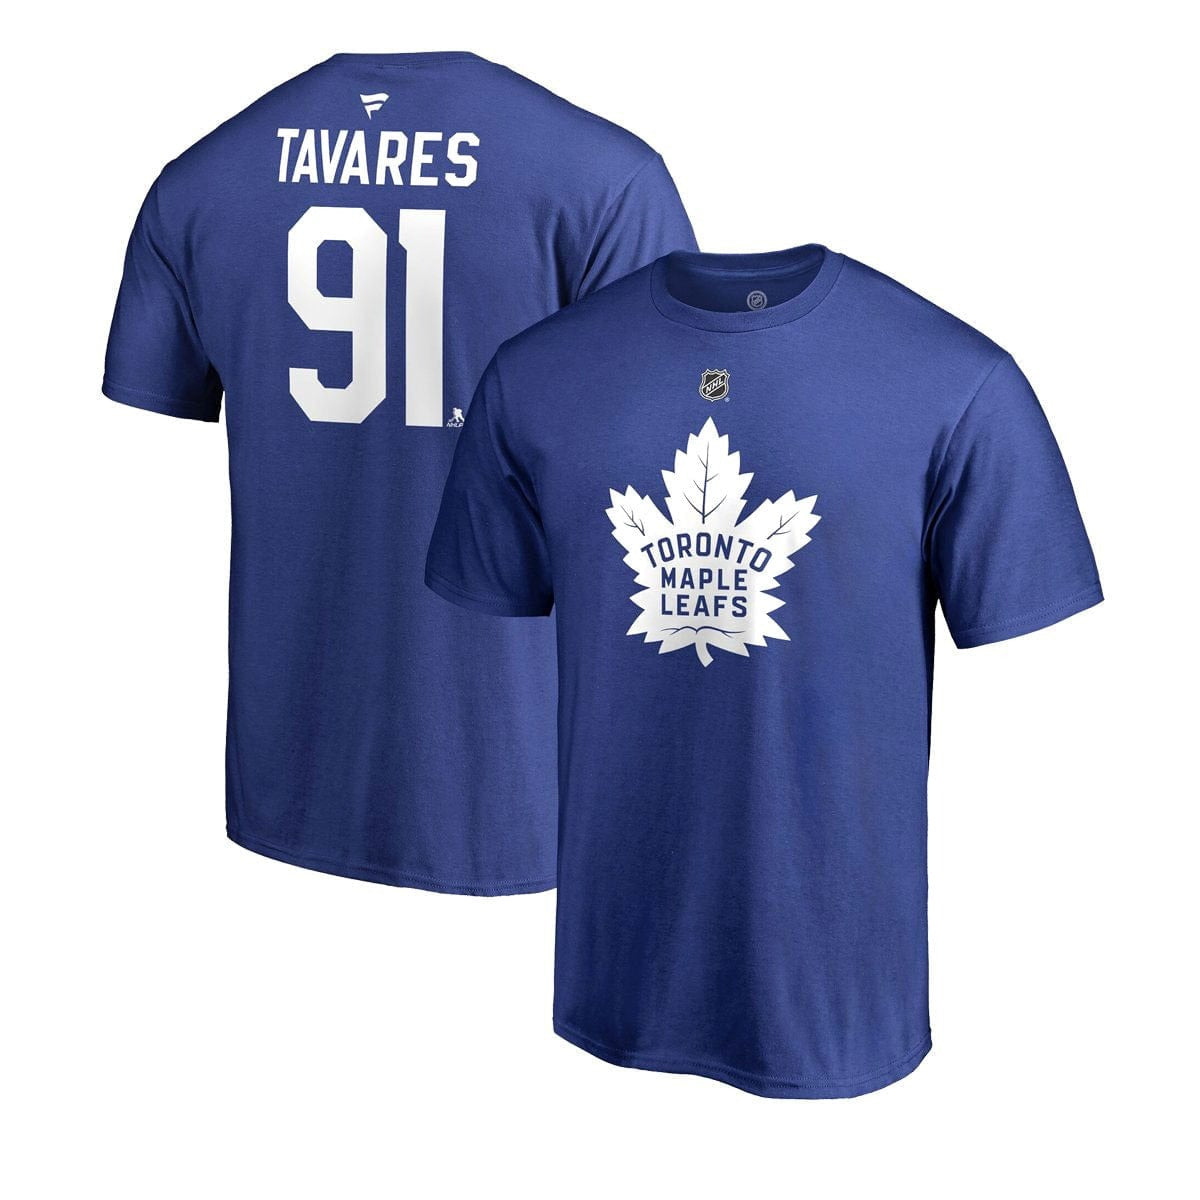 Toronto Maple Leafs Fanatics Authentic Name & Number Mens Shirt - John Tavares